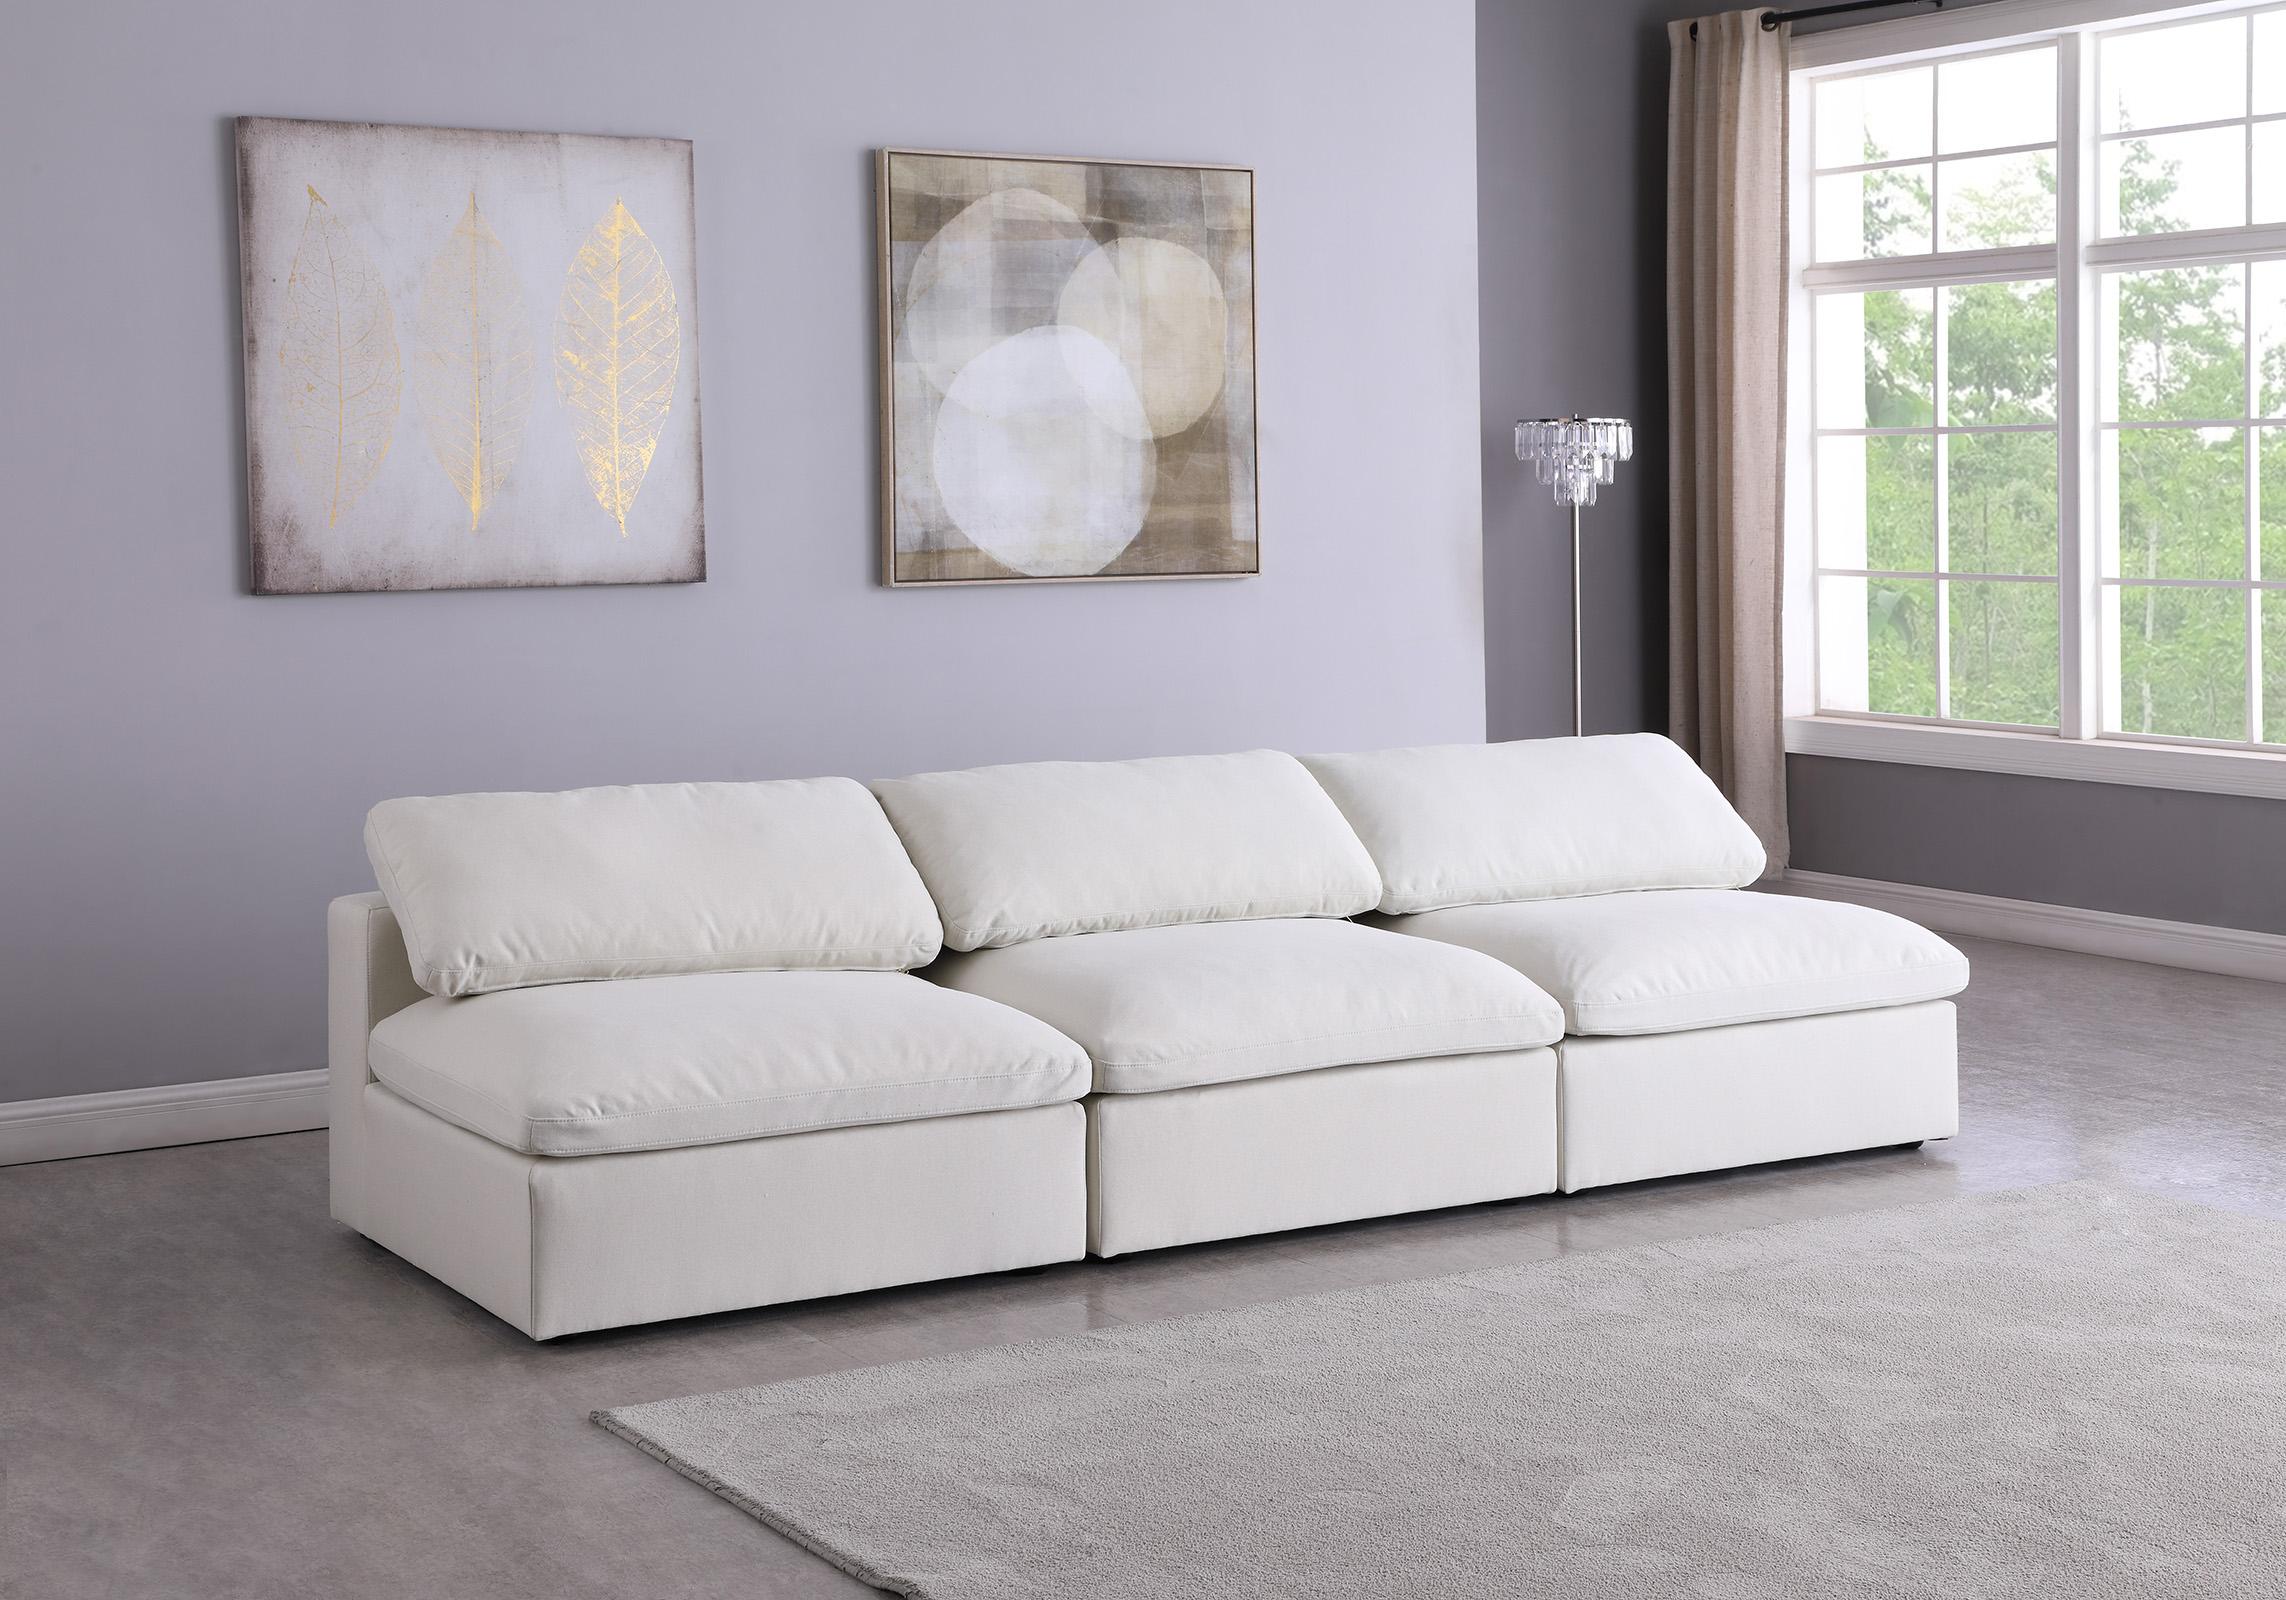 

    
Serene Cream Linen Textured Fabric Deluxe Comfort Modular Armless Sofa S117 Meridian
